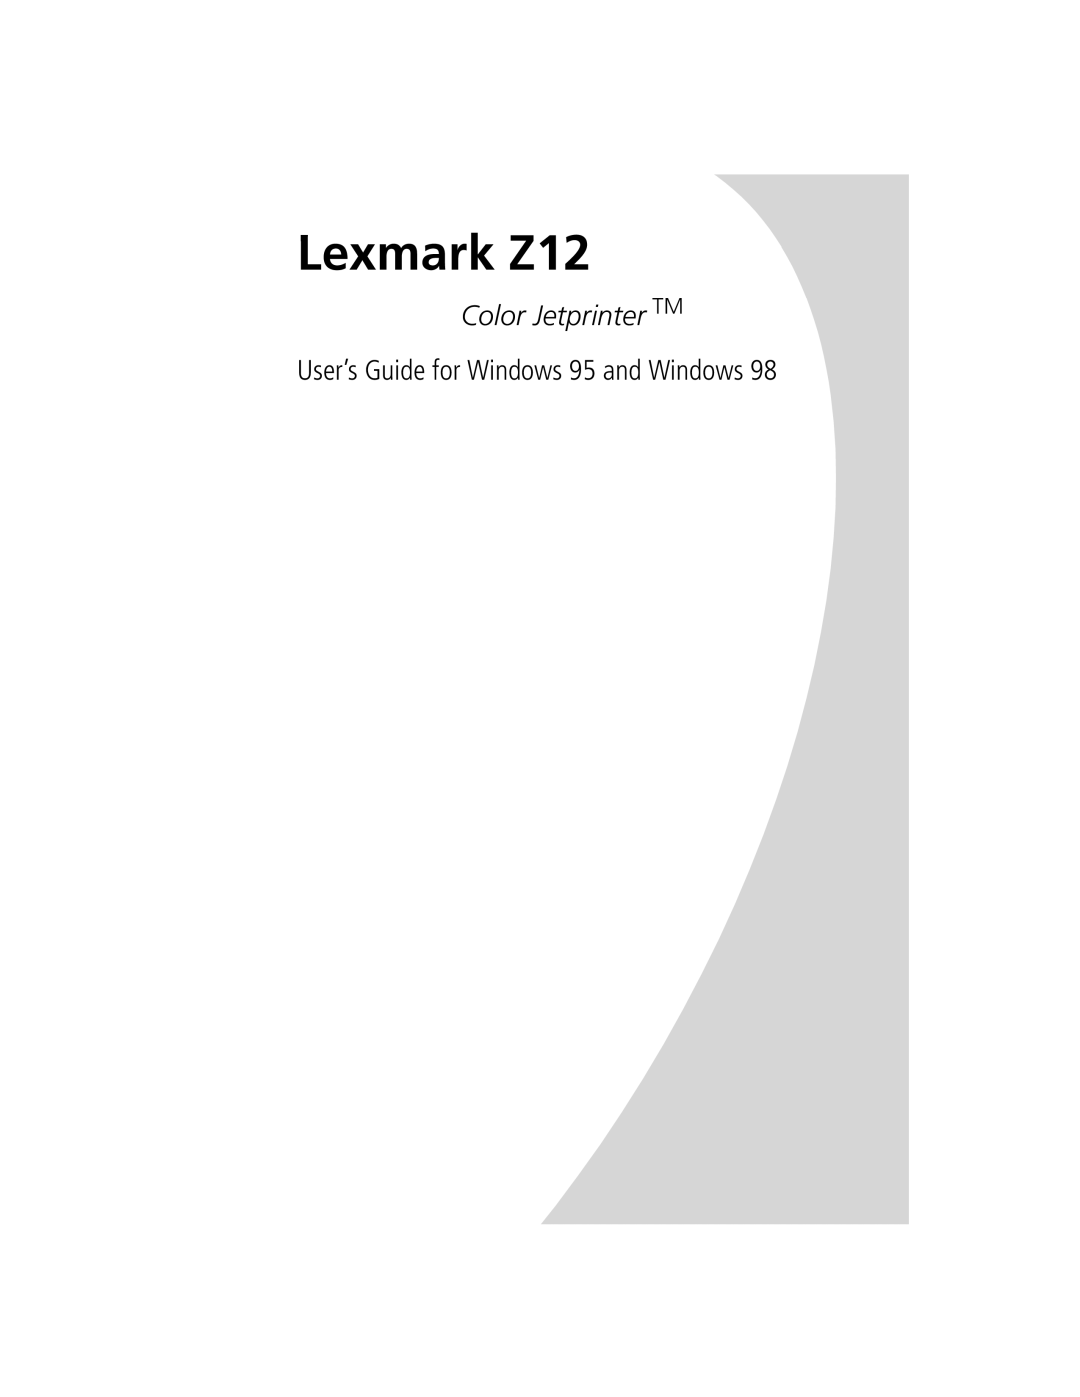 Lexmark manual Lexmark Z12, Color Jetprinter TM, User’s Guide for Windows 95 and Windows 